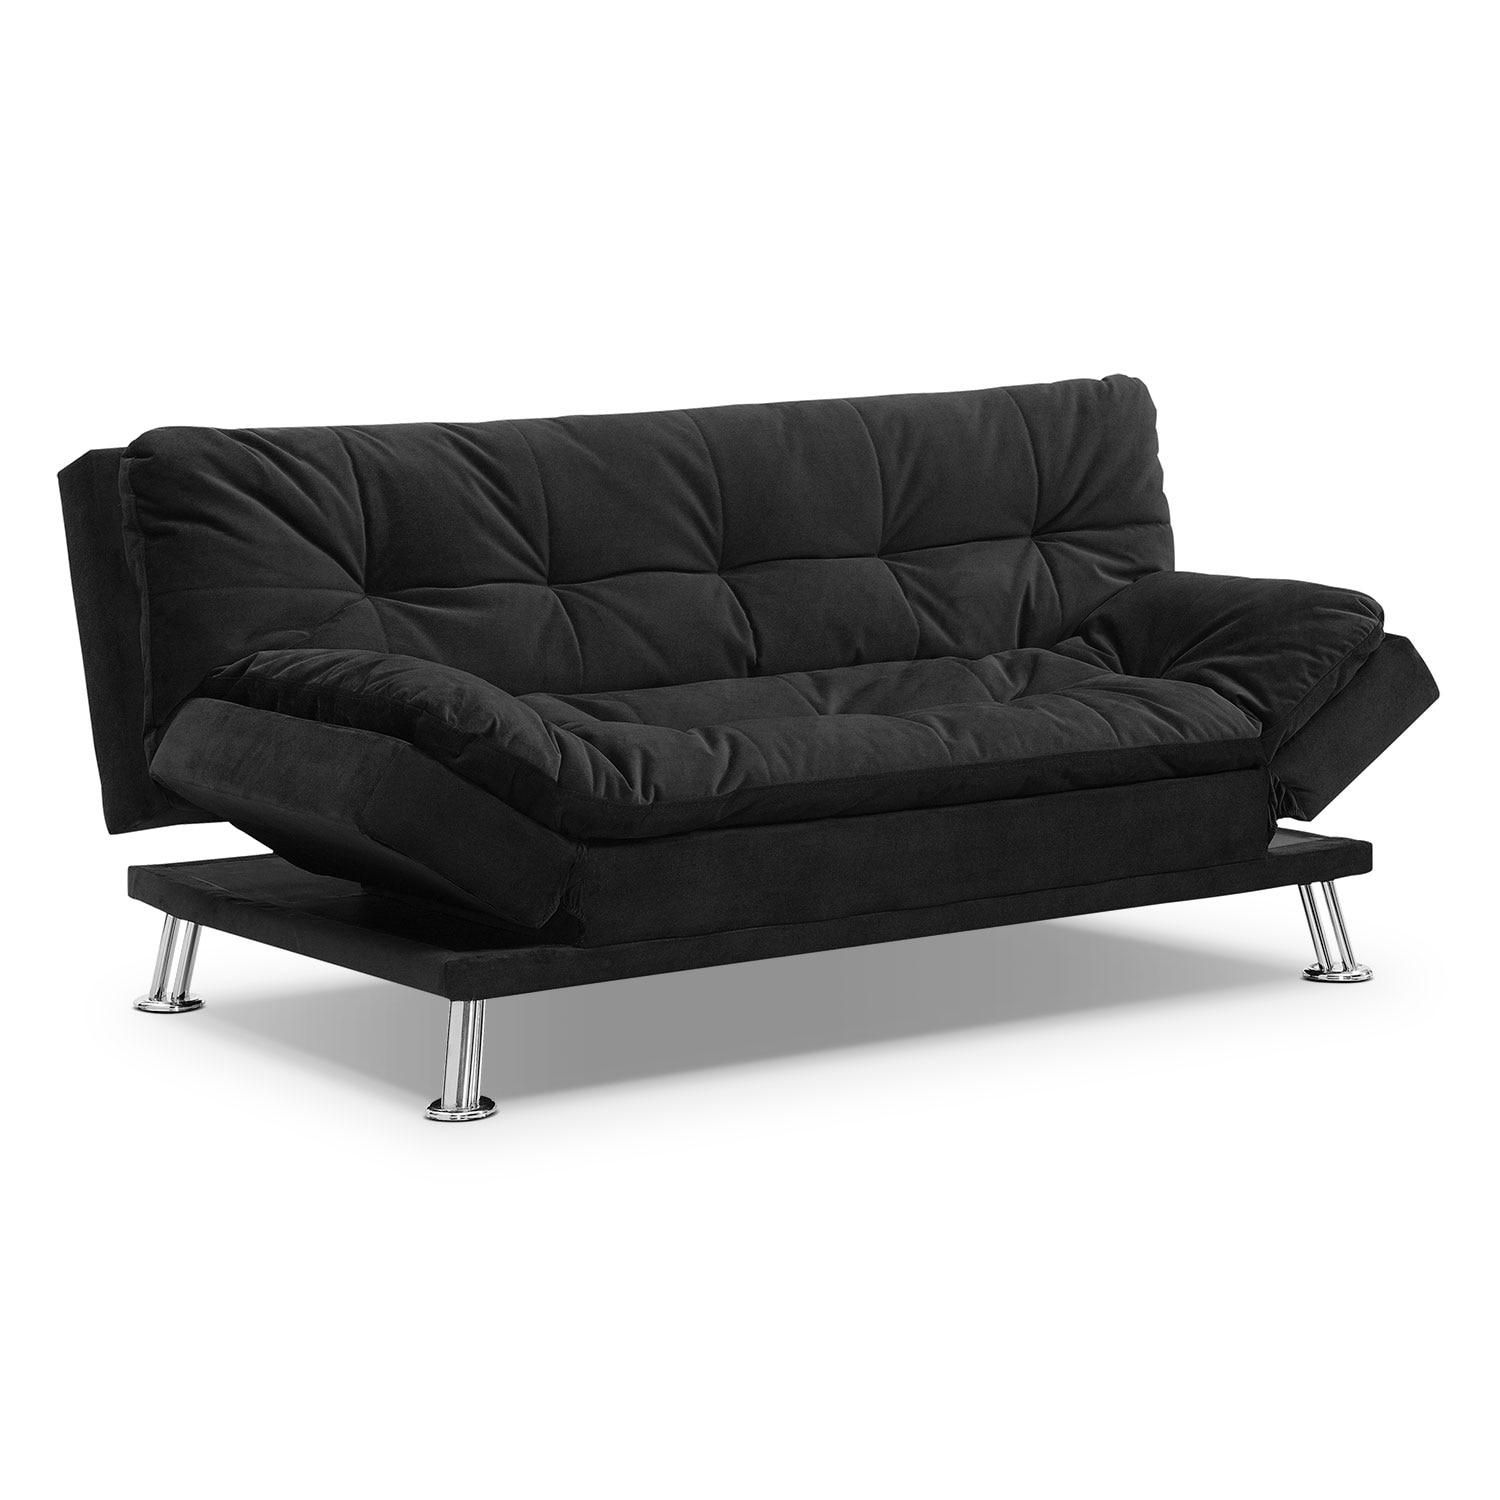 Waltz Futon Sofa Bed – Black | Value City Furniture Regarding Small Black Futon Sofa Beds (View 2 of 20)